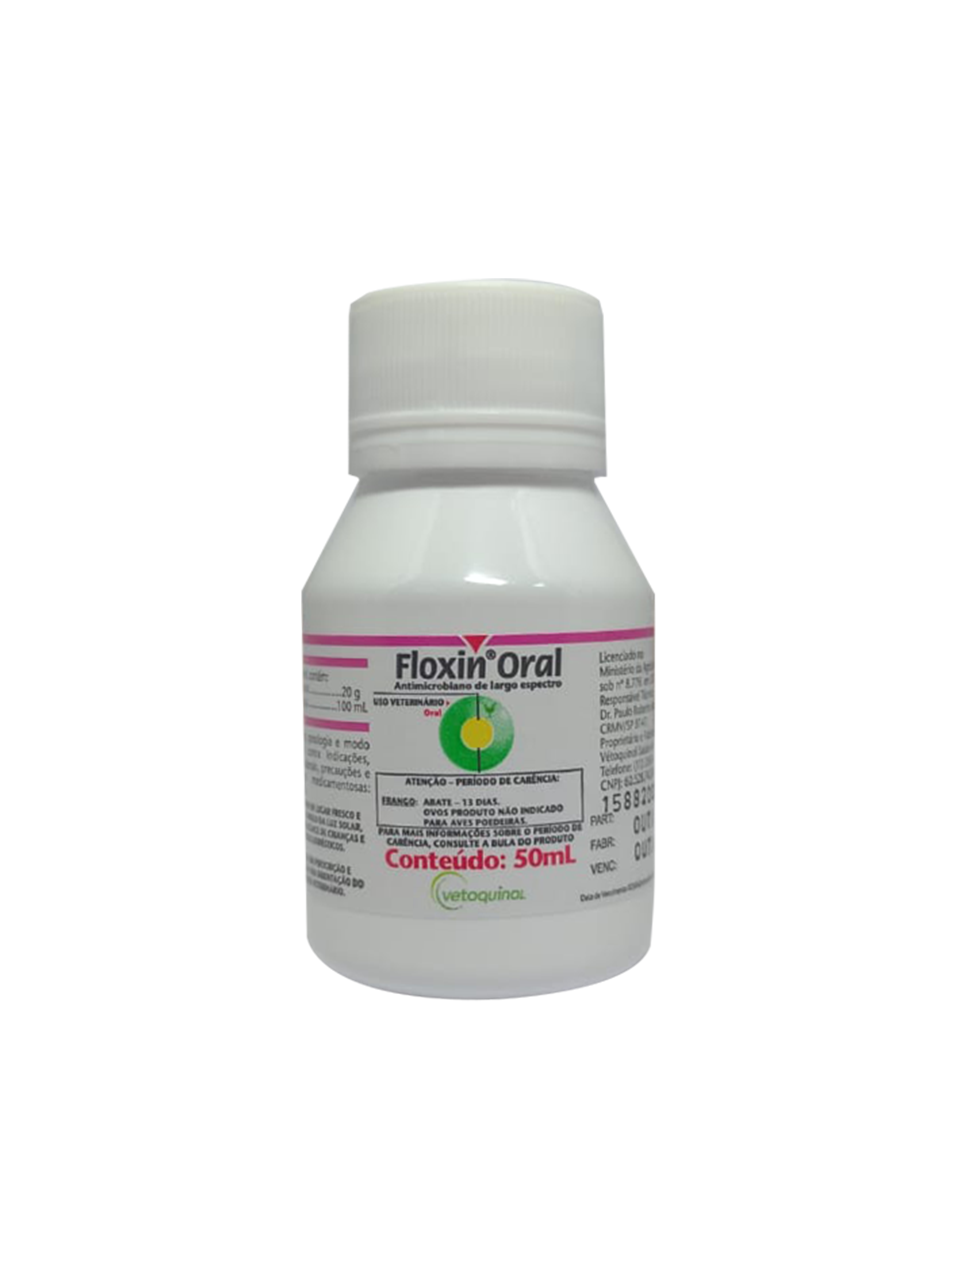 Floxin® Oral 20% - 50ml